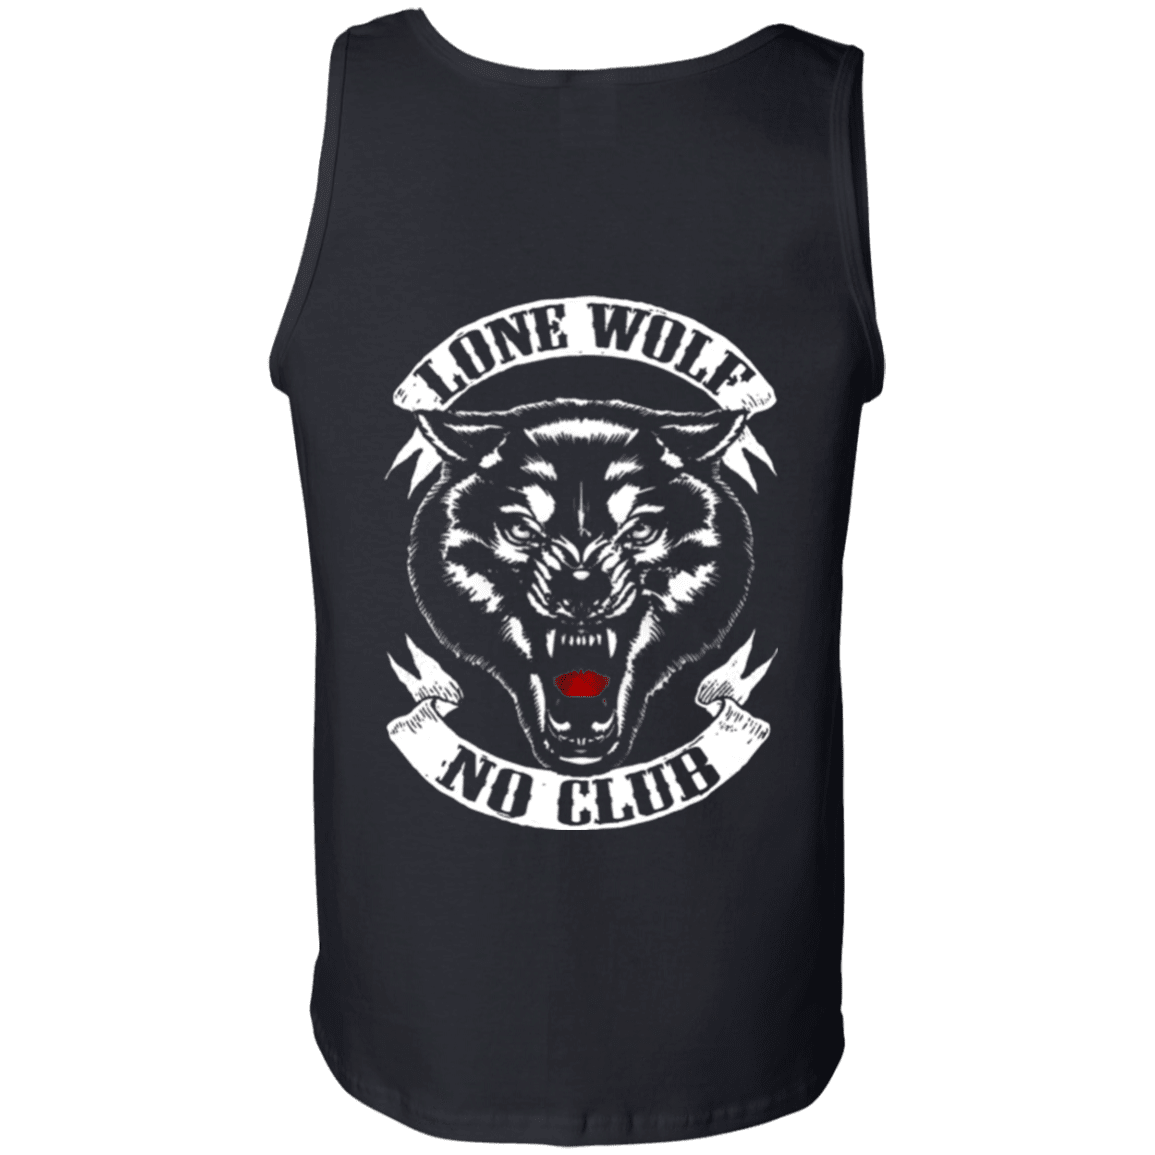 Lone Wolf T-Shirt & Hoodies - American Legend Rider